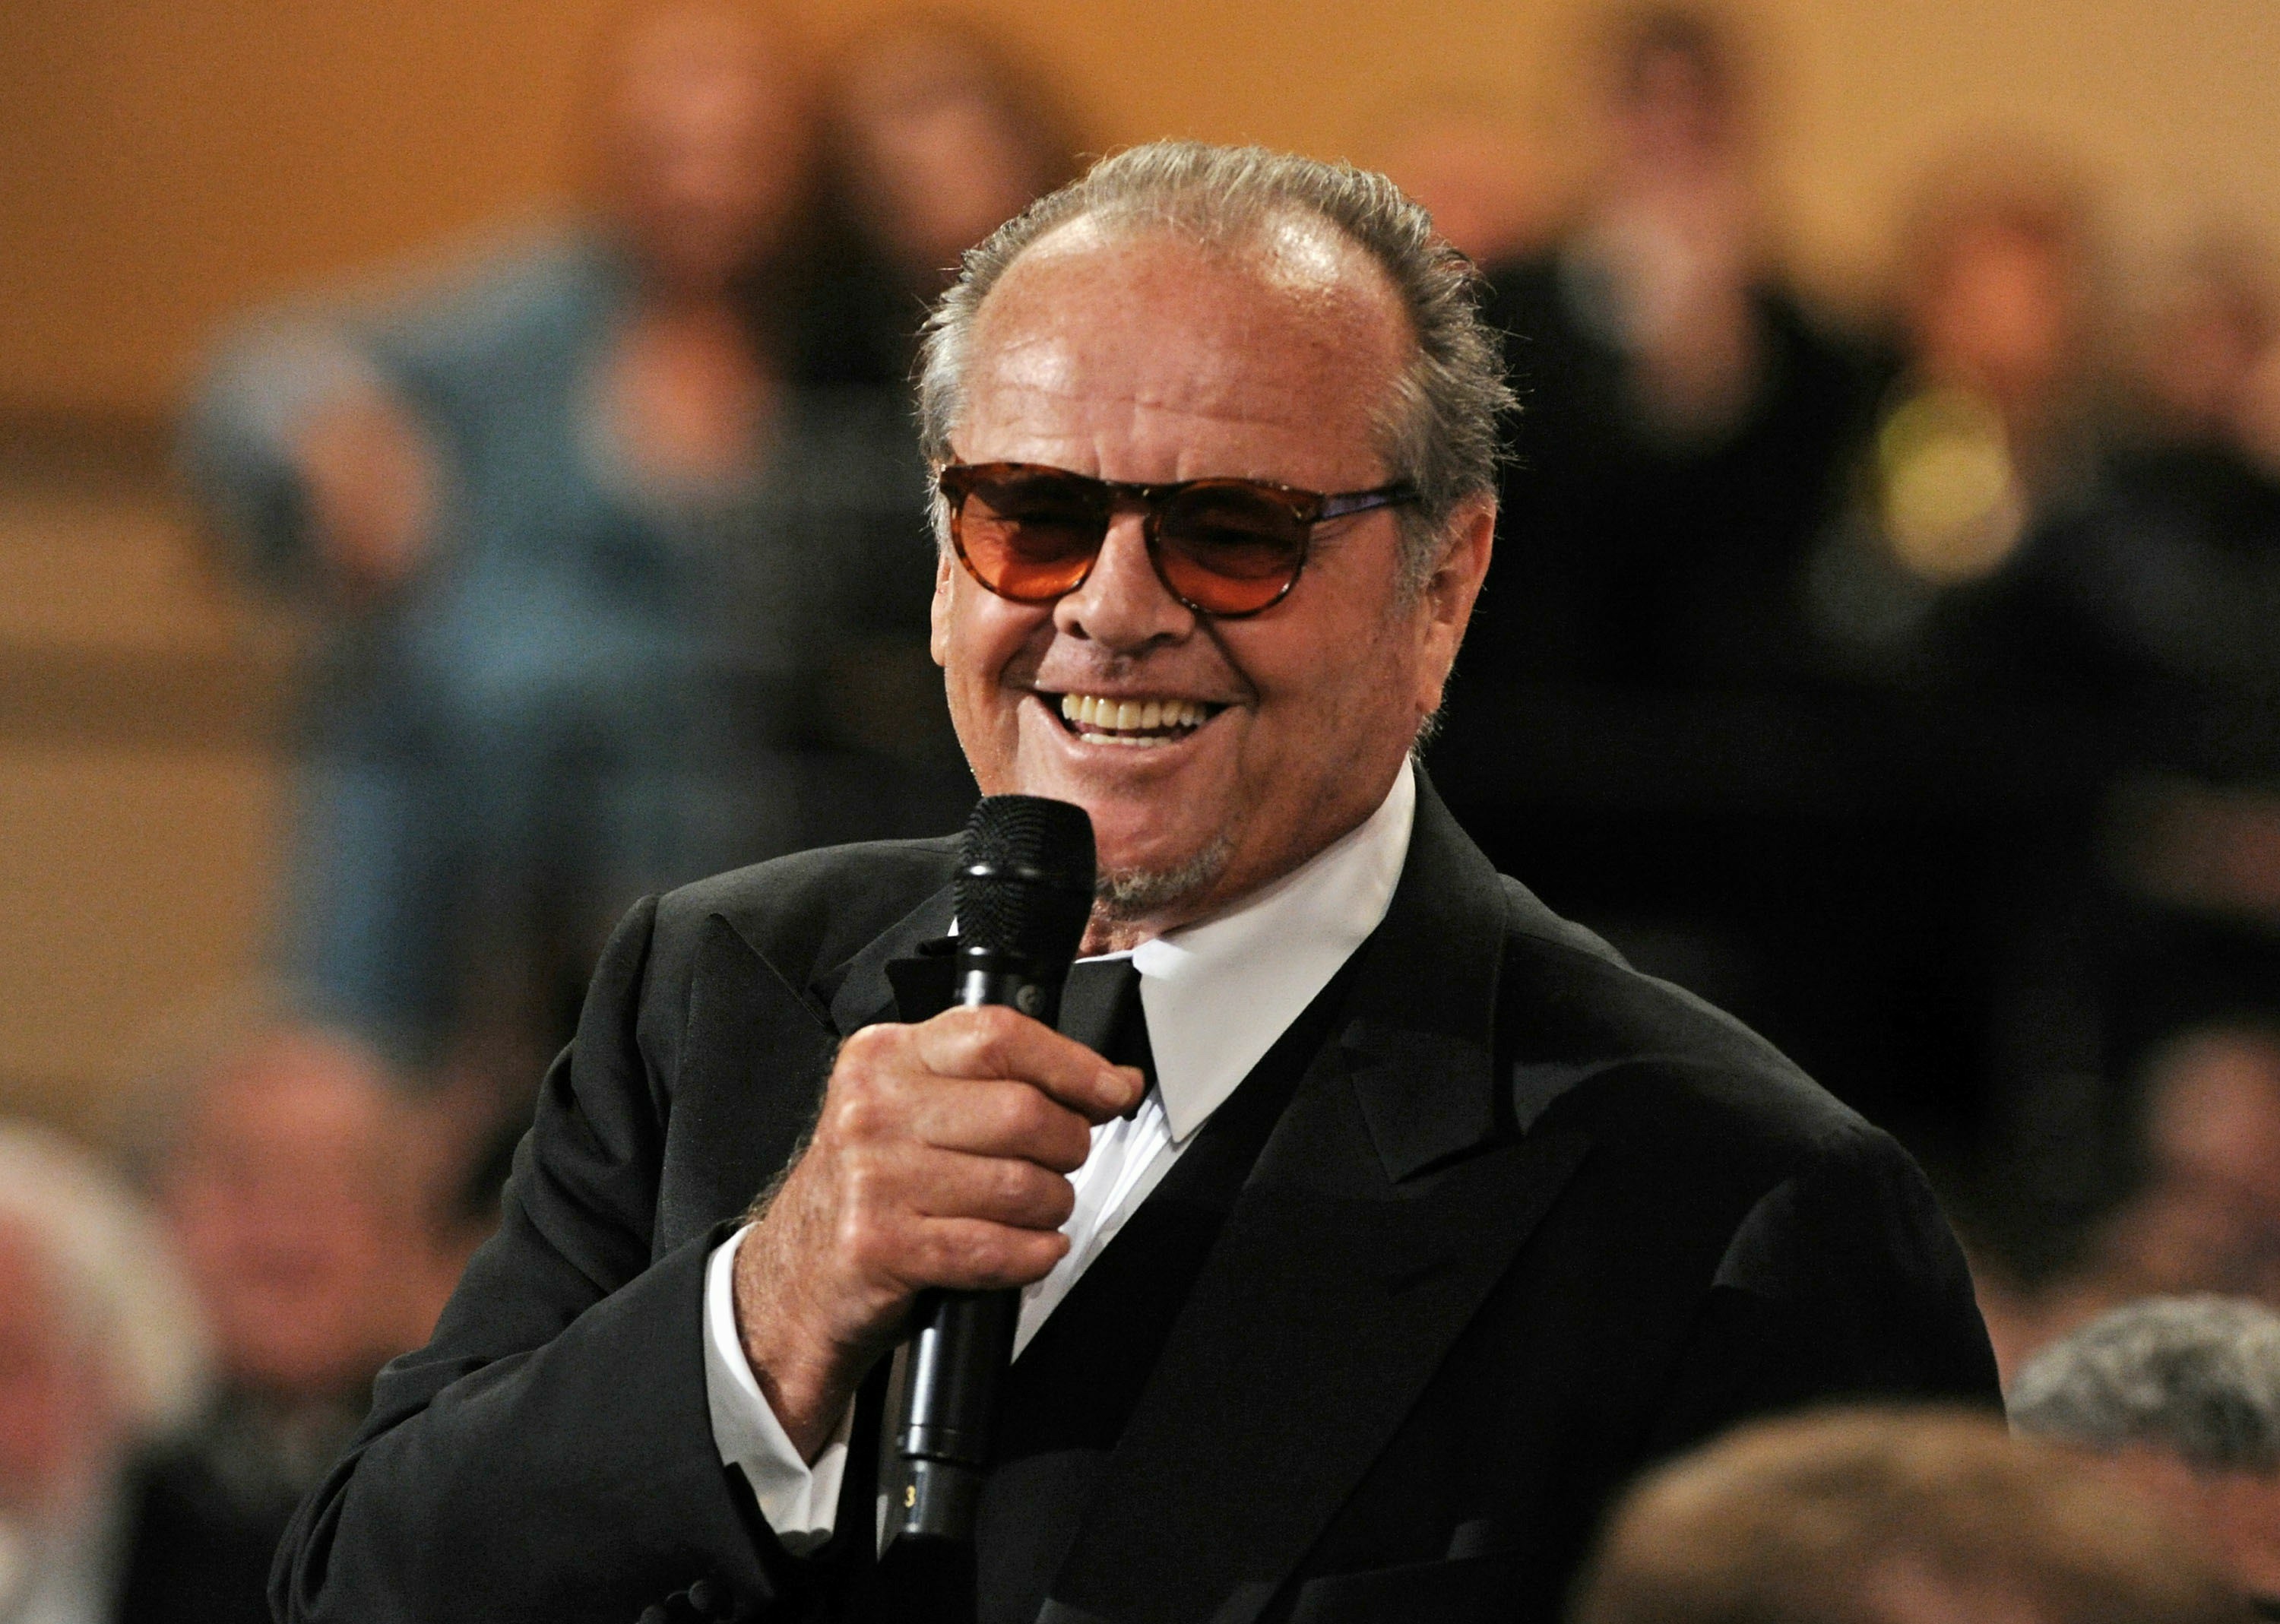 Jack Nicholson: "Io playboy pentito, cerco un ultimo vero amore"